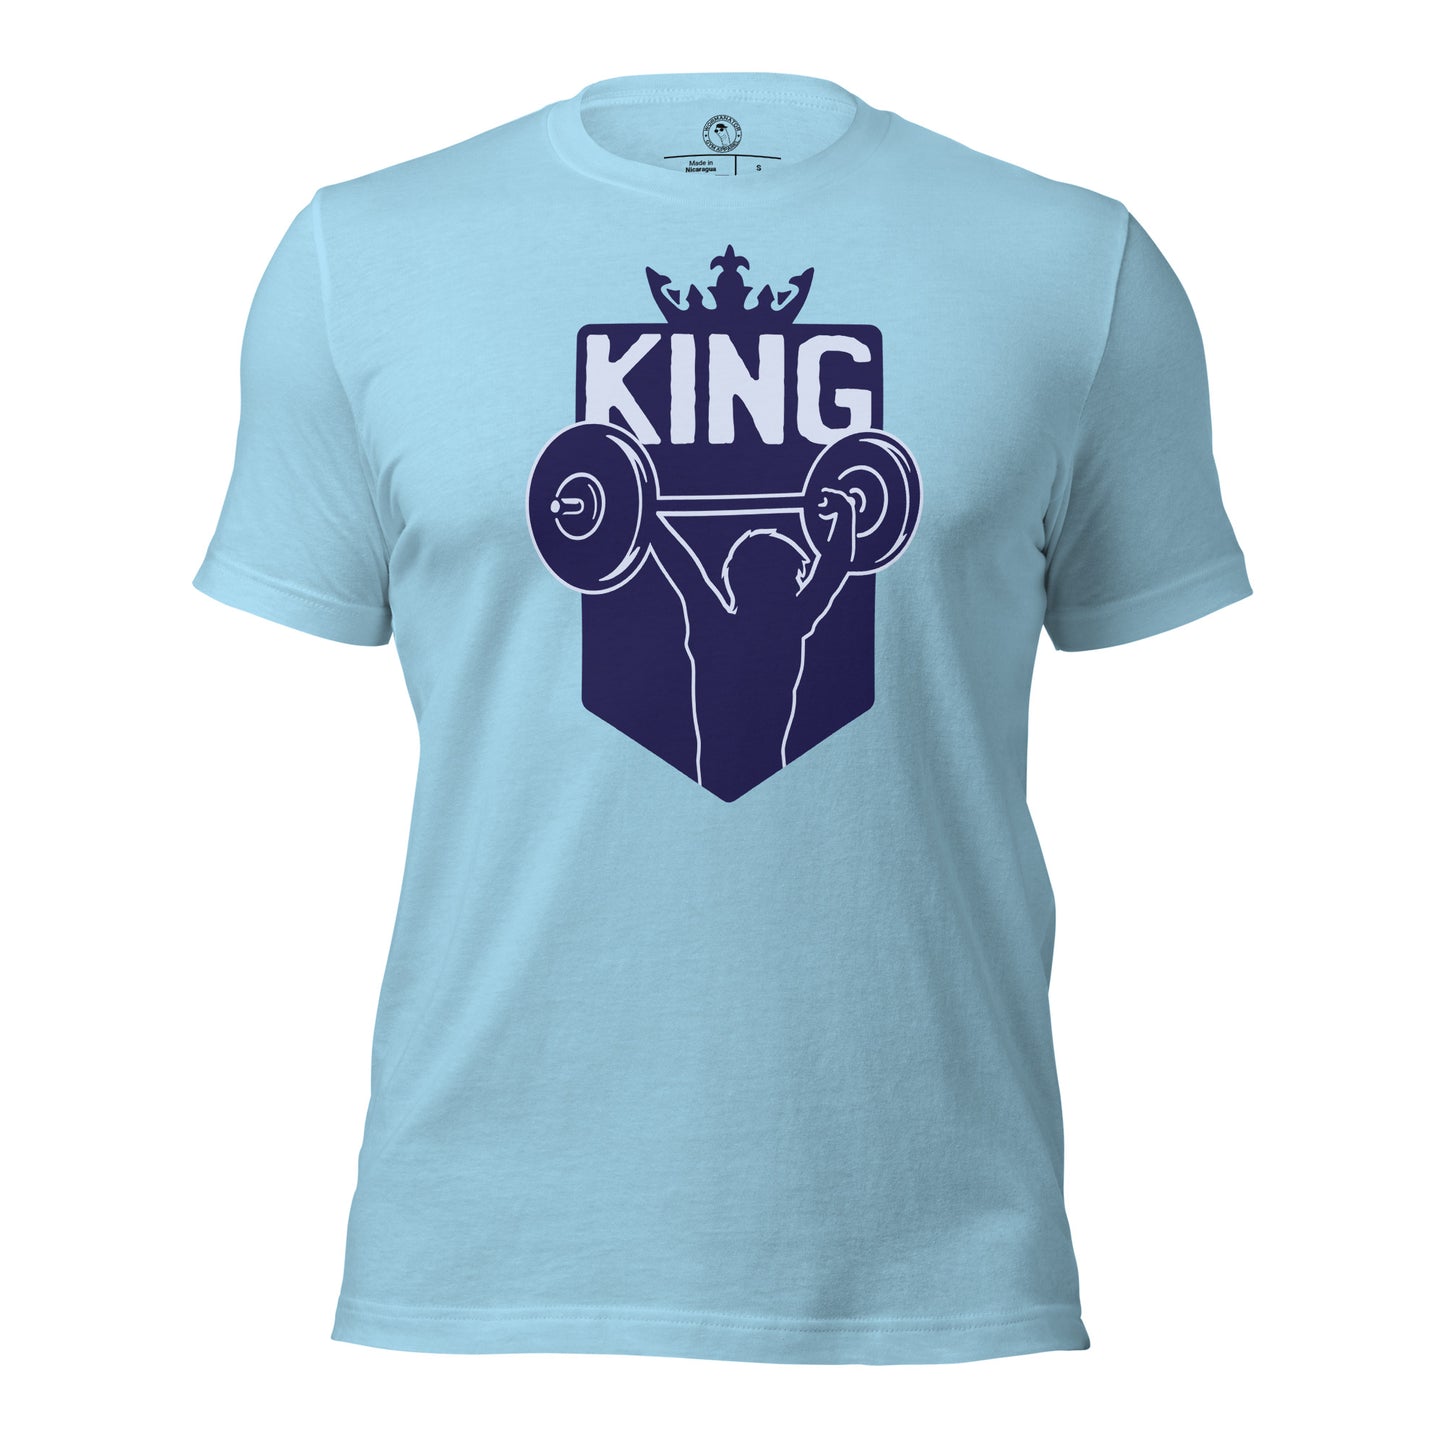 Gym King Shirt in Ocean Blue